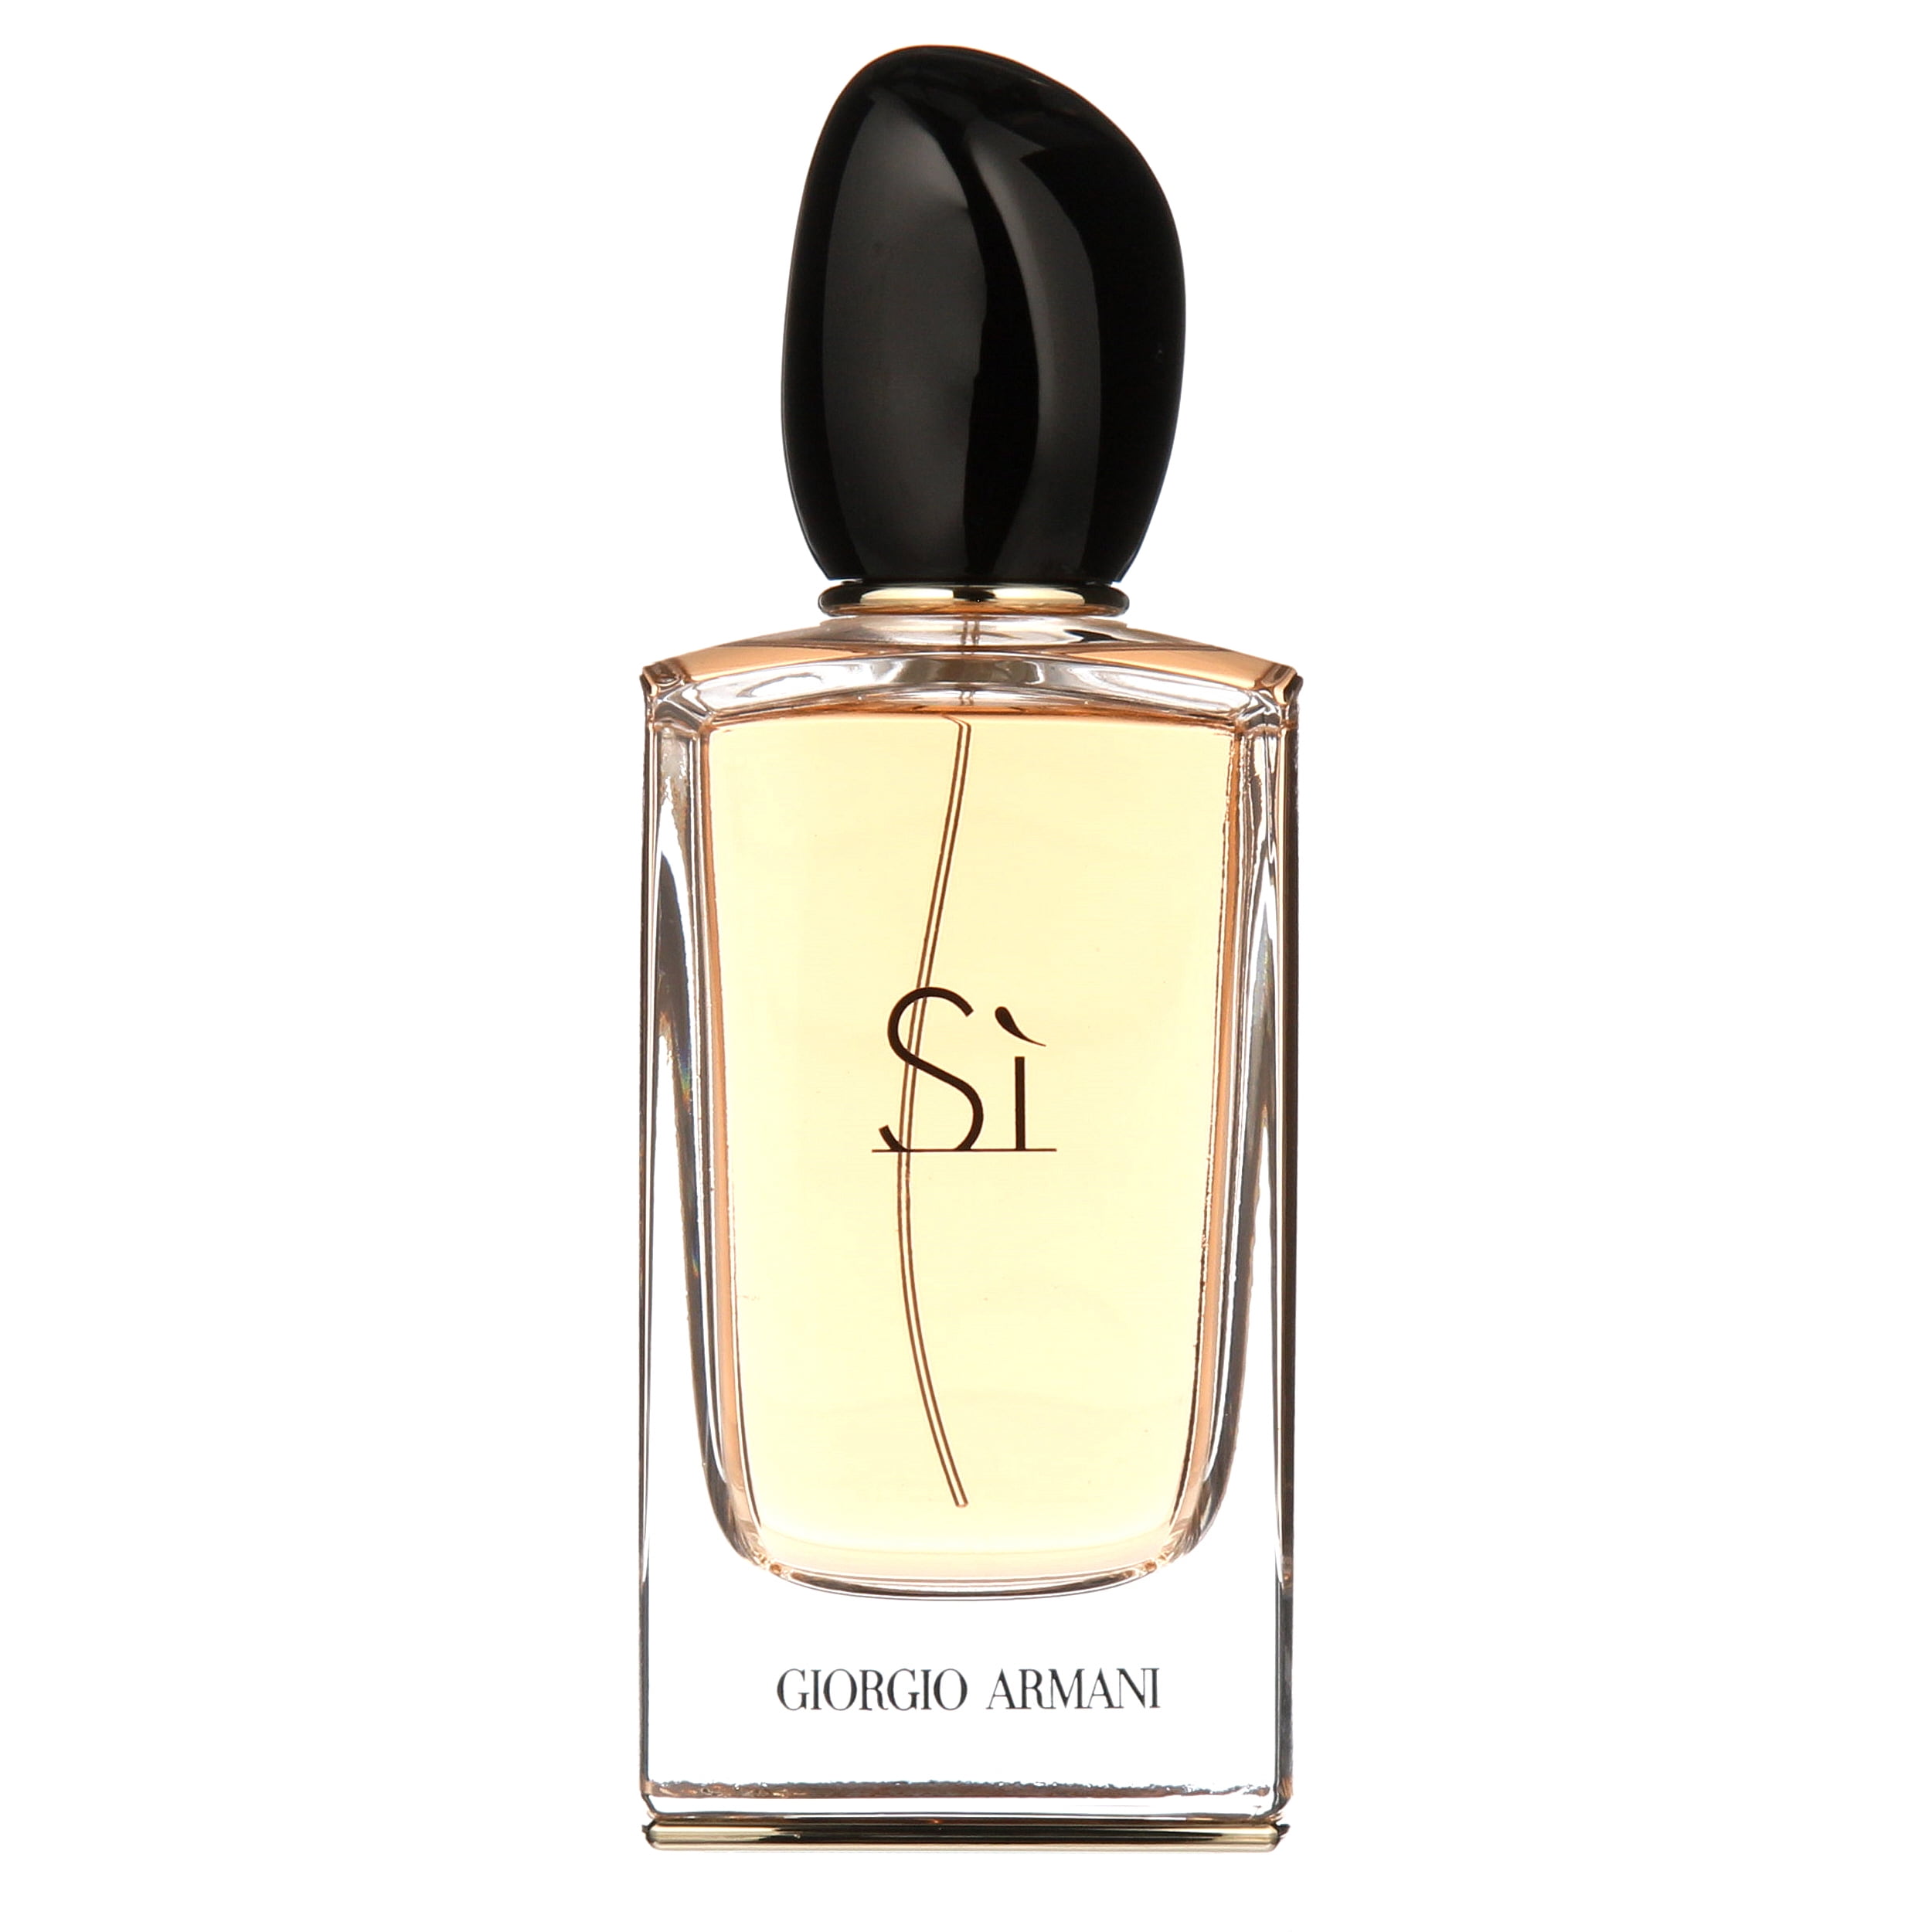 Giorgio Armani Si Eau de Parfum, Perfume for Women, 3.3 oz